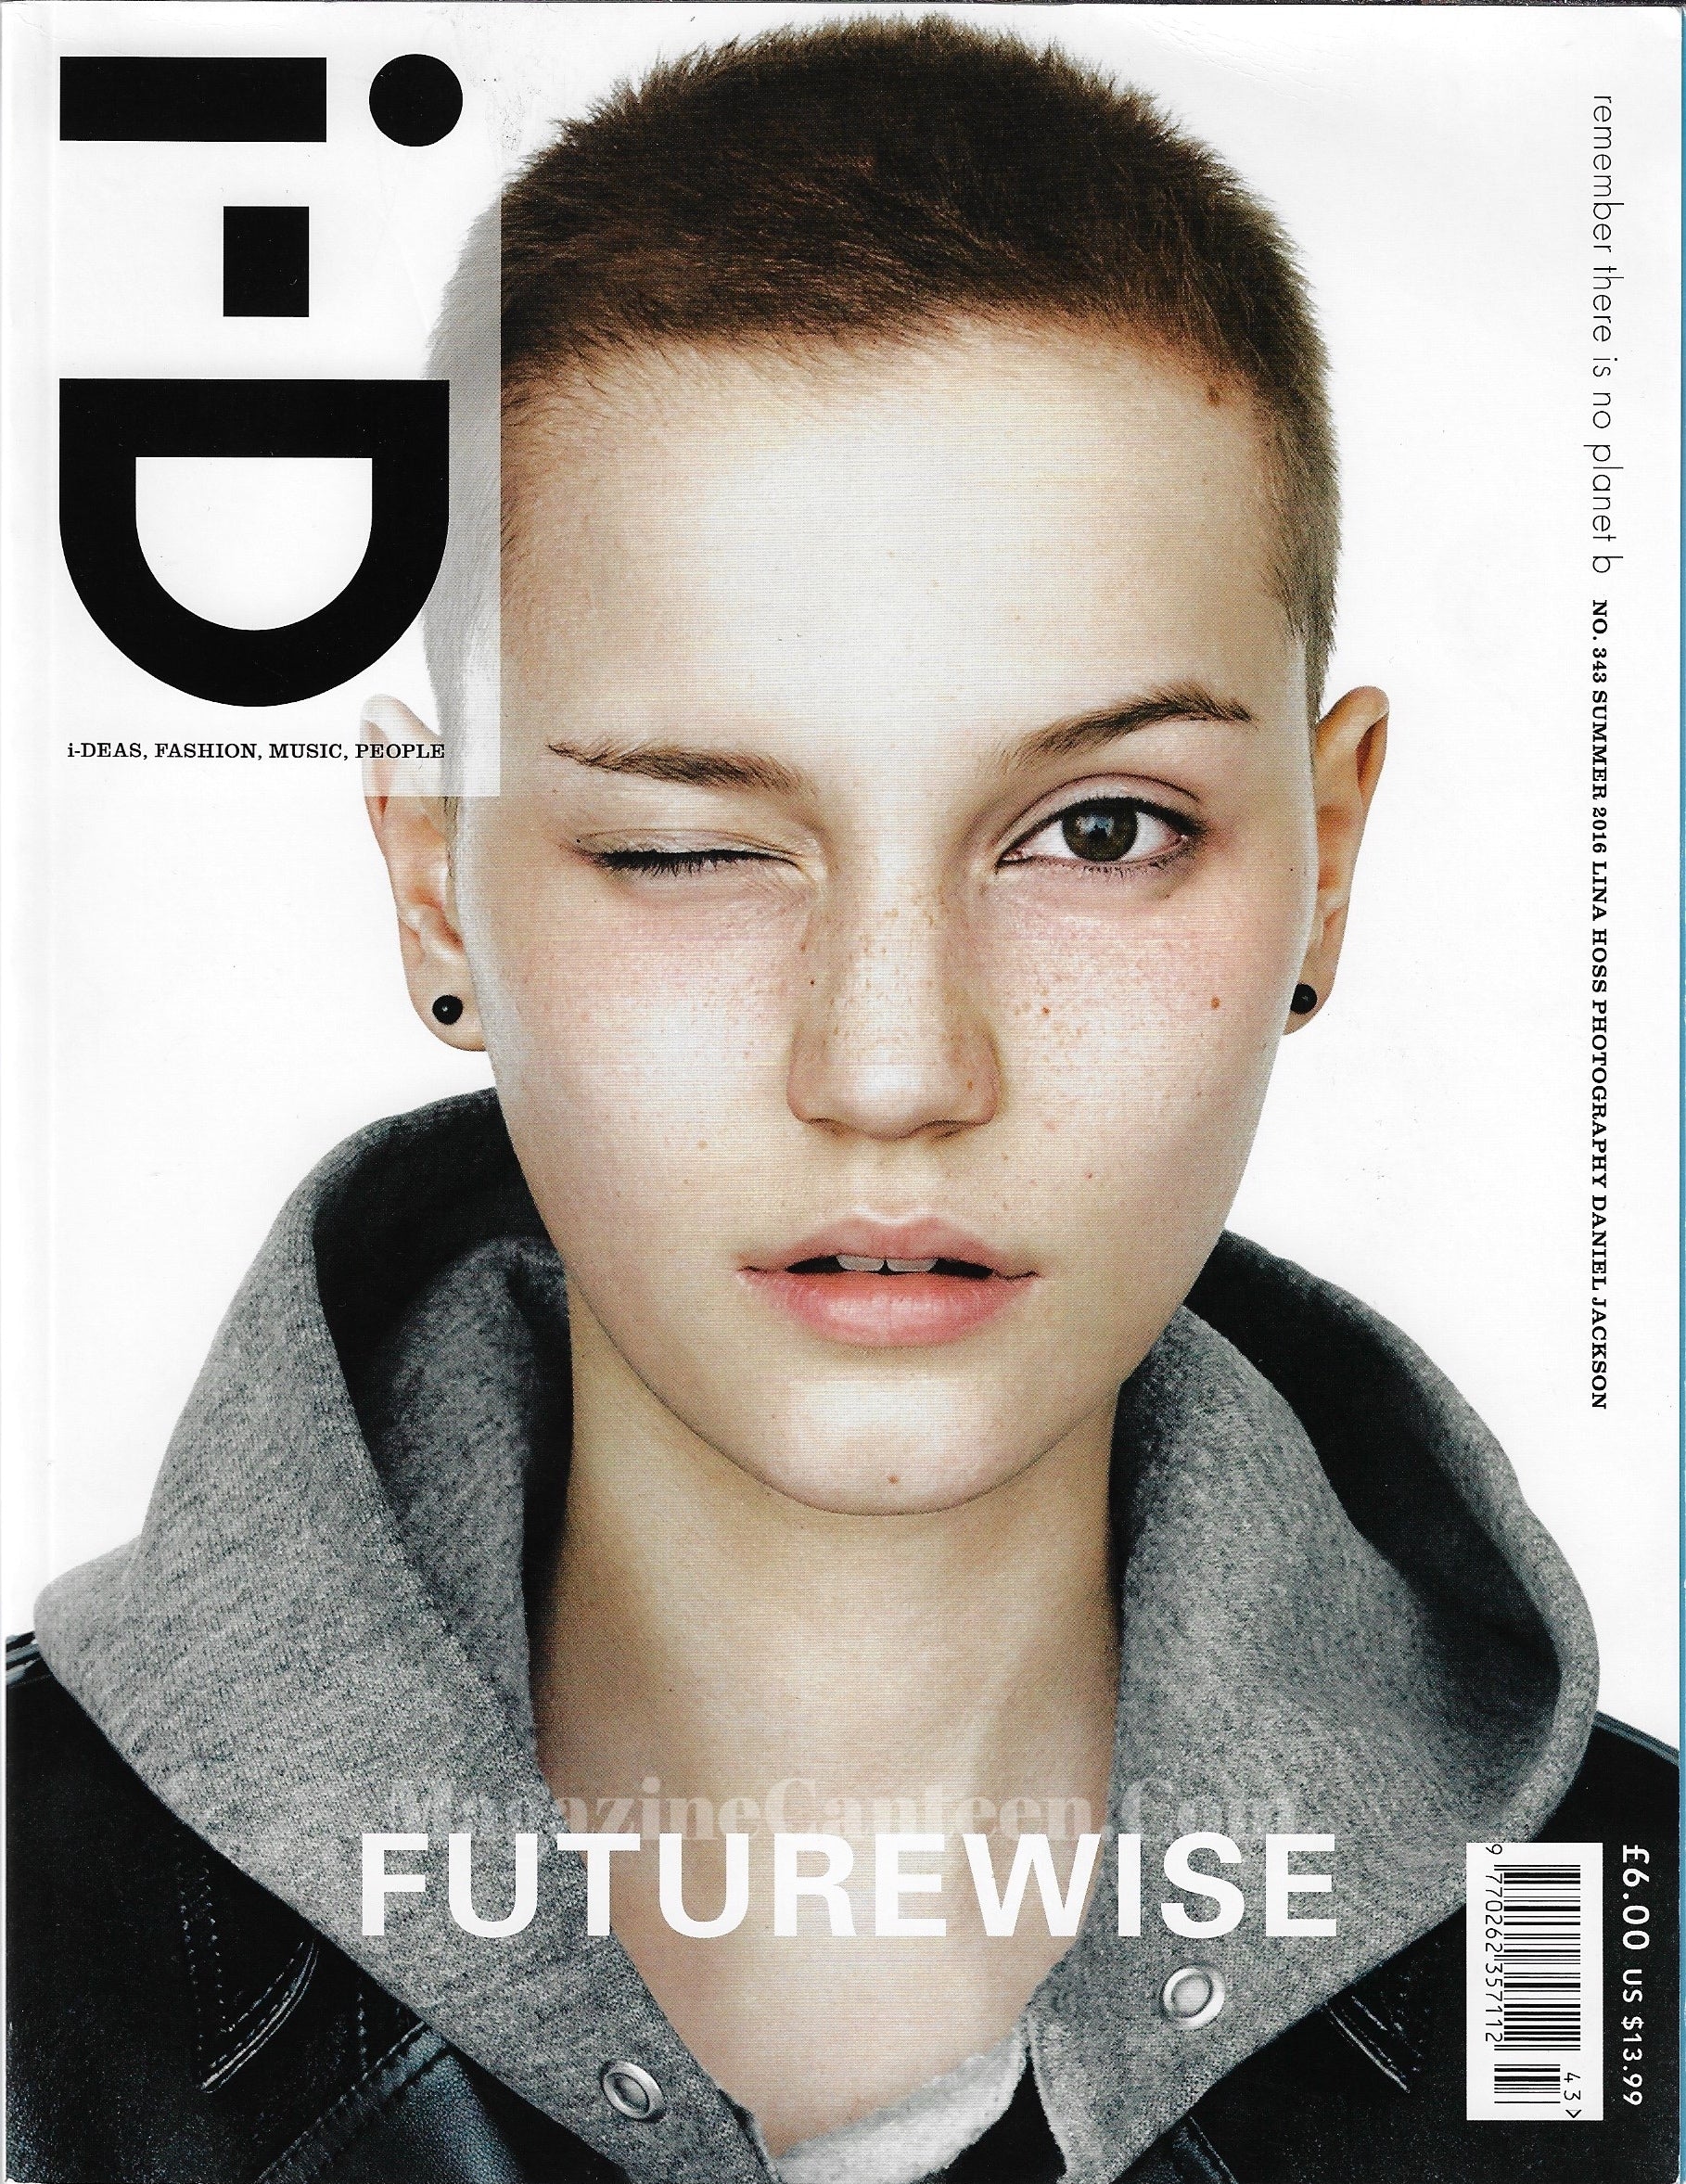 I-D Magazine 343 - Lina Hoss 2016